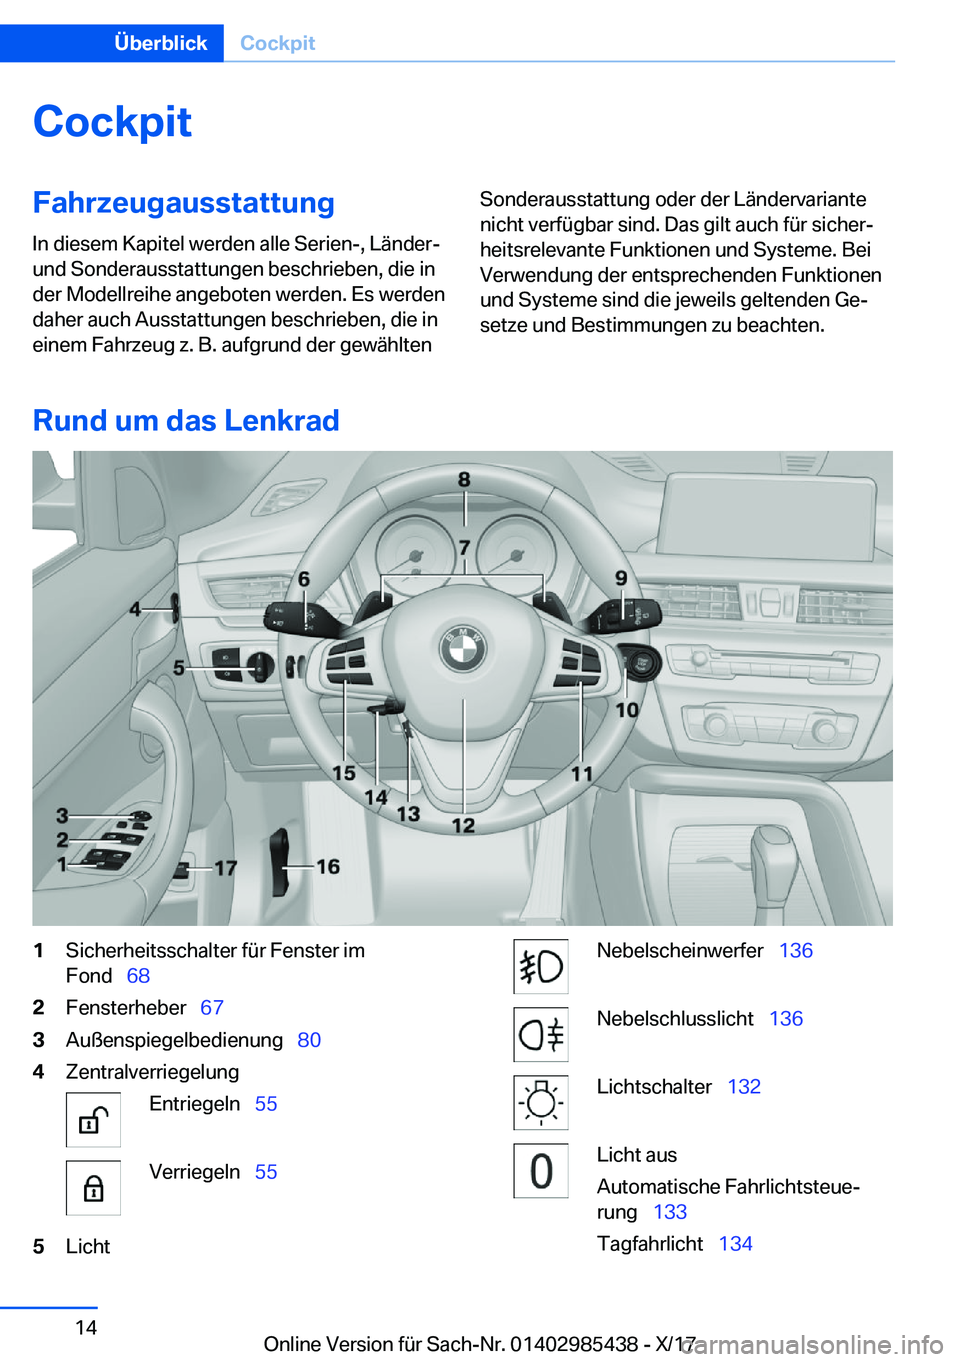 BMW X1 2018  Betriebsanleitungen (in German) �C�o�c�k�p�i�t�F�a�h�r�z�e�u�g�a�u�s�s�t�a�t�t�u�n�g
�I�n� �d�i�e�s�e�m� �K�a�p�i�t�e�l� �w�e�r�d�e�n� �a�l�l�e� �S�e�r�i�e�n�-�,� �L�